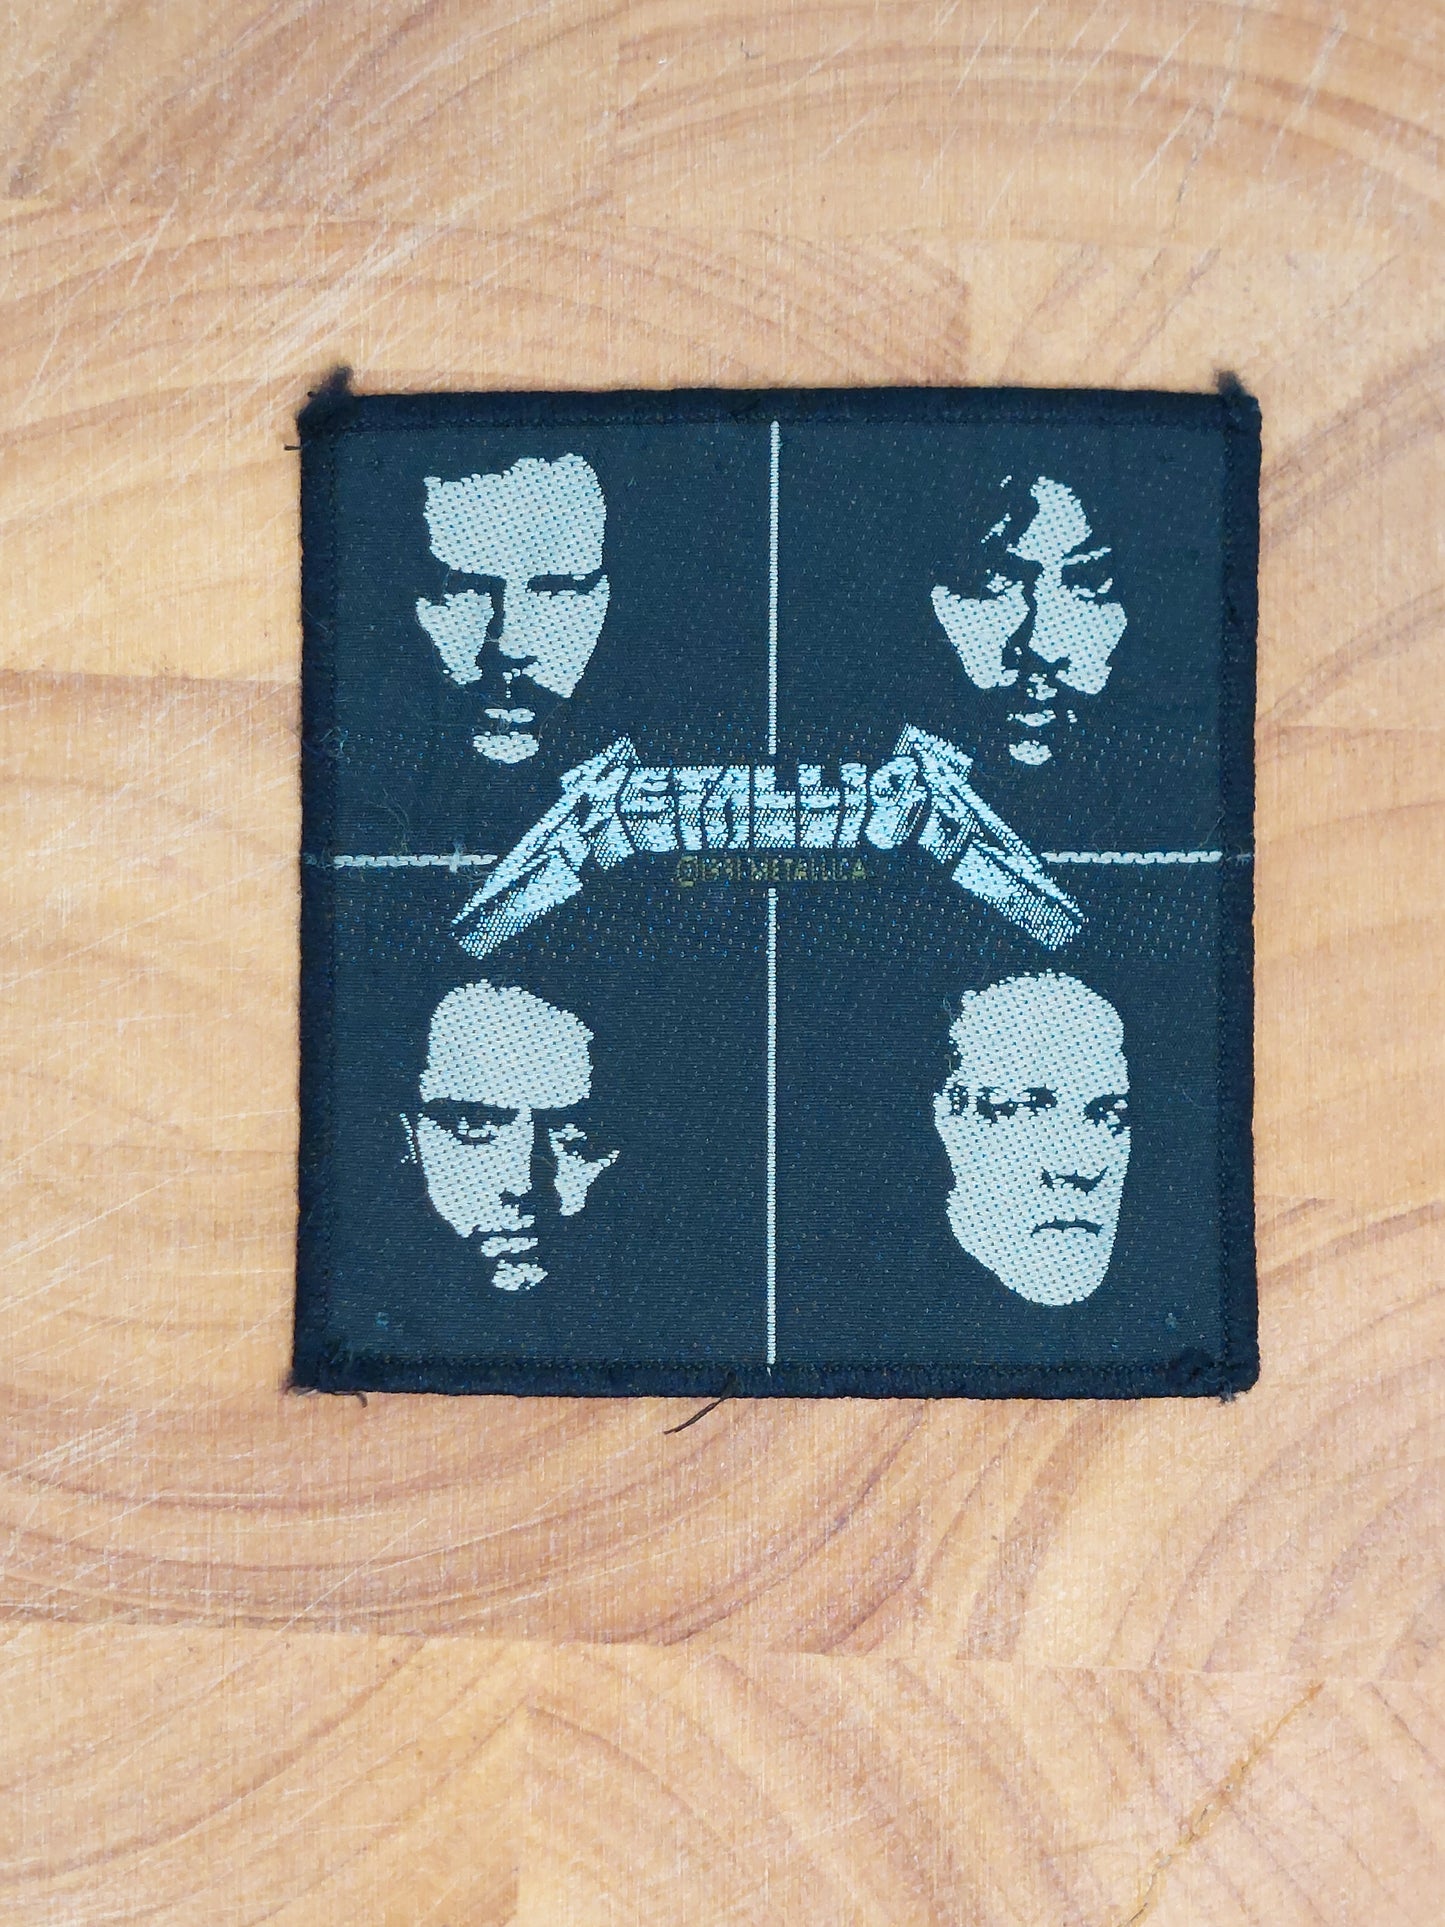 Metallica faces